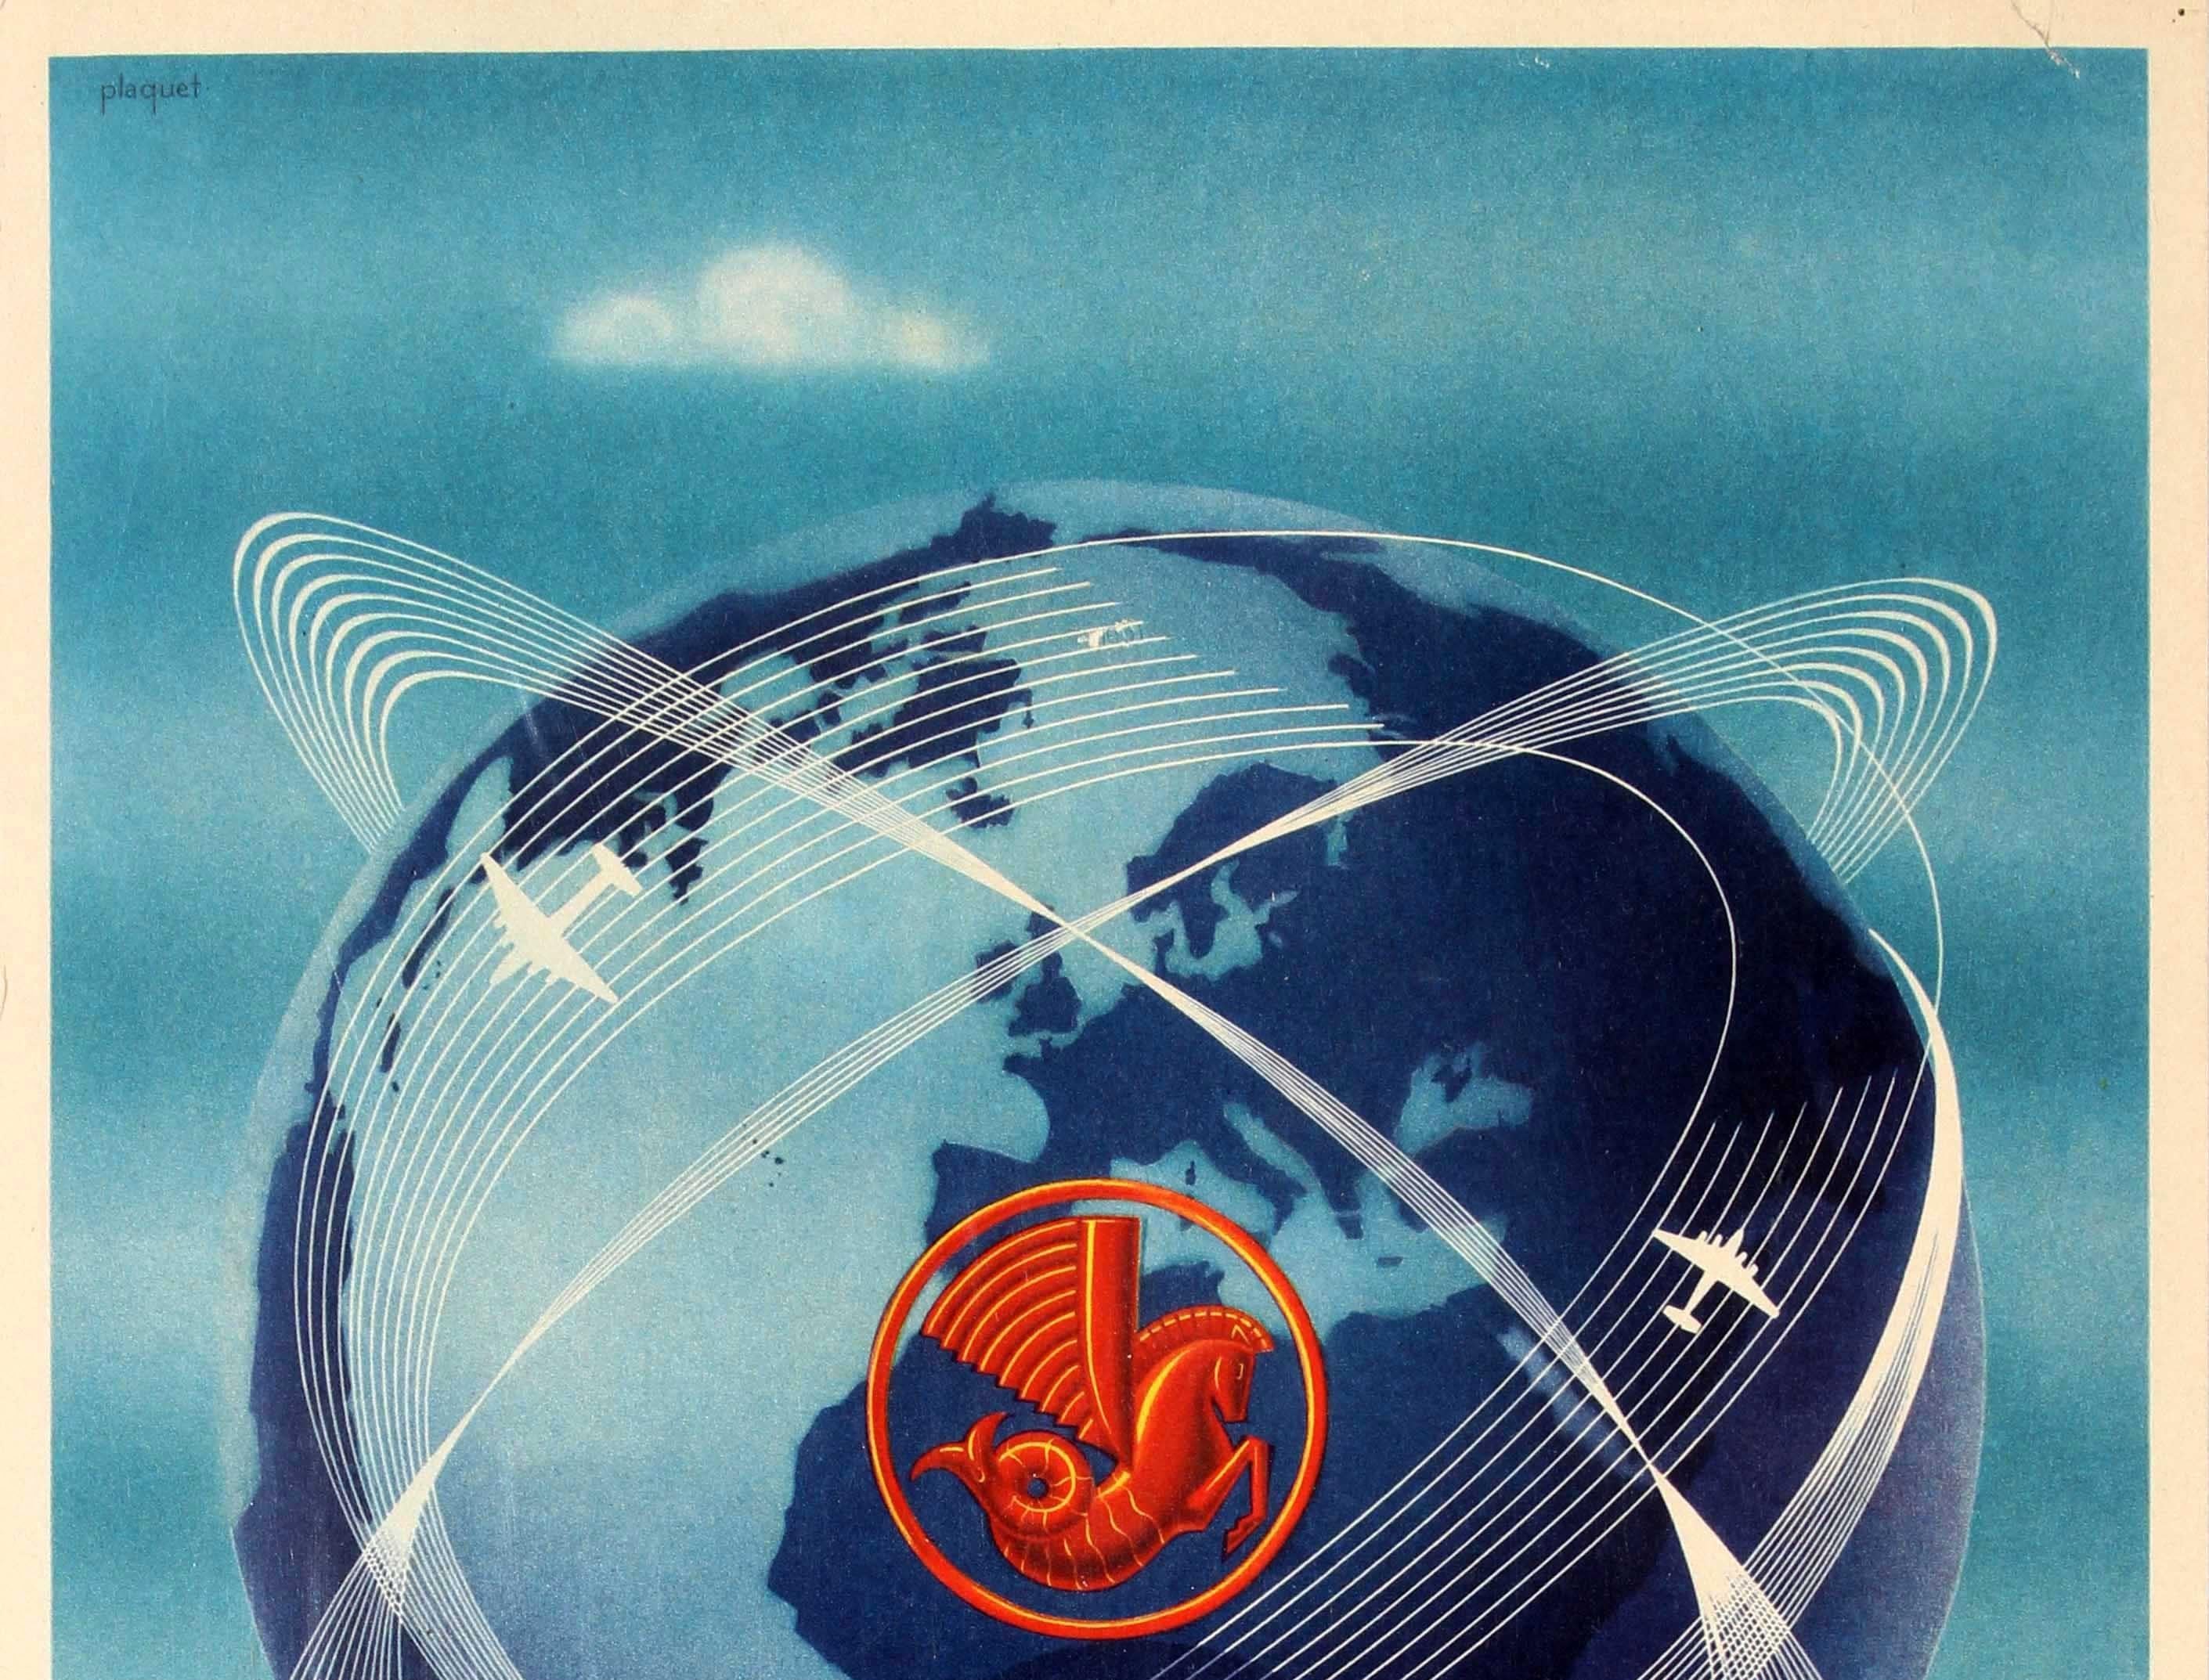 Original Vintage Air France Poster Reseau Aerien Mondial World Air Network Globe - Print by Plaquet